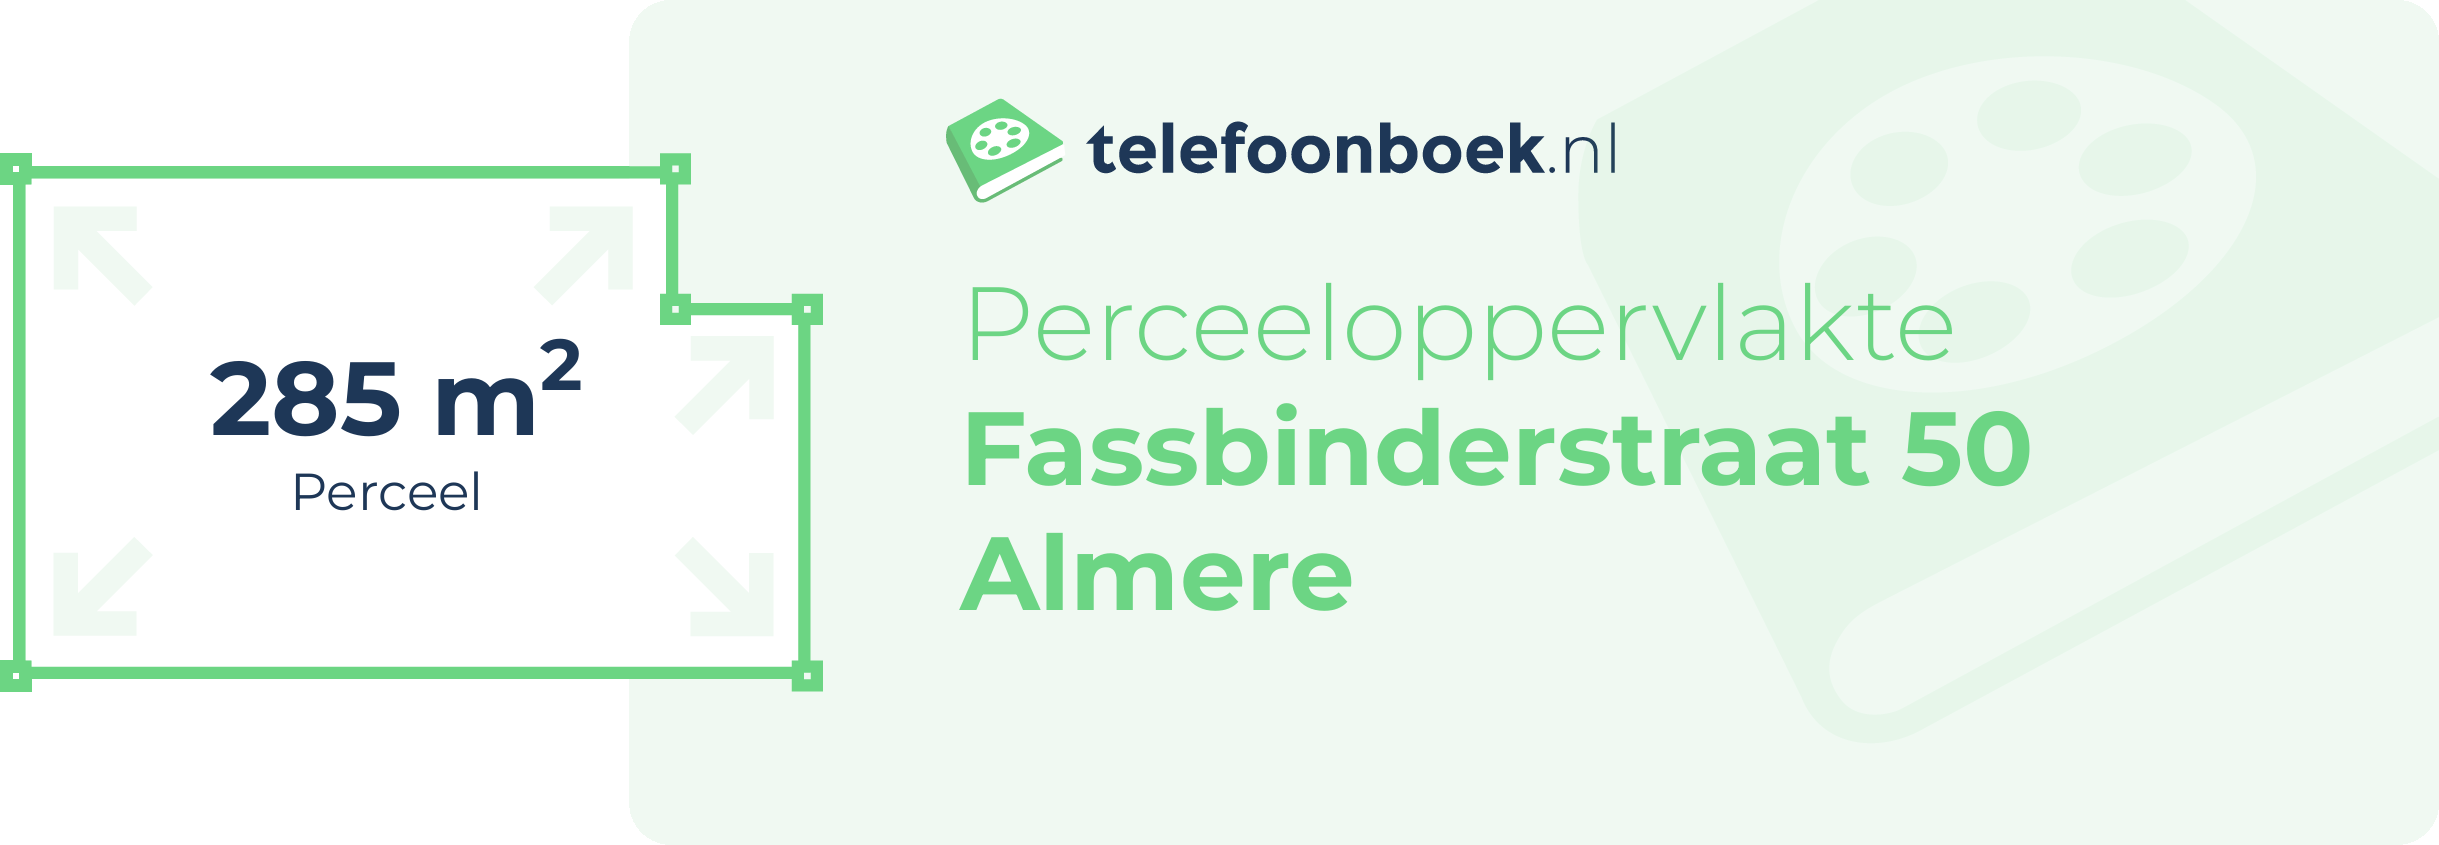 Perceeloppervlakte Fassbinderstraat 50 Almere